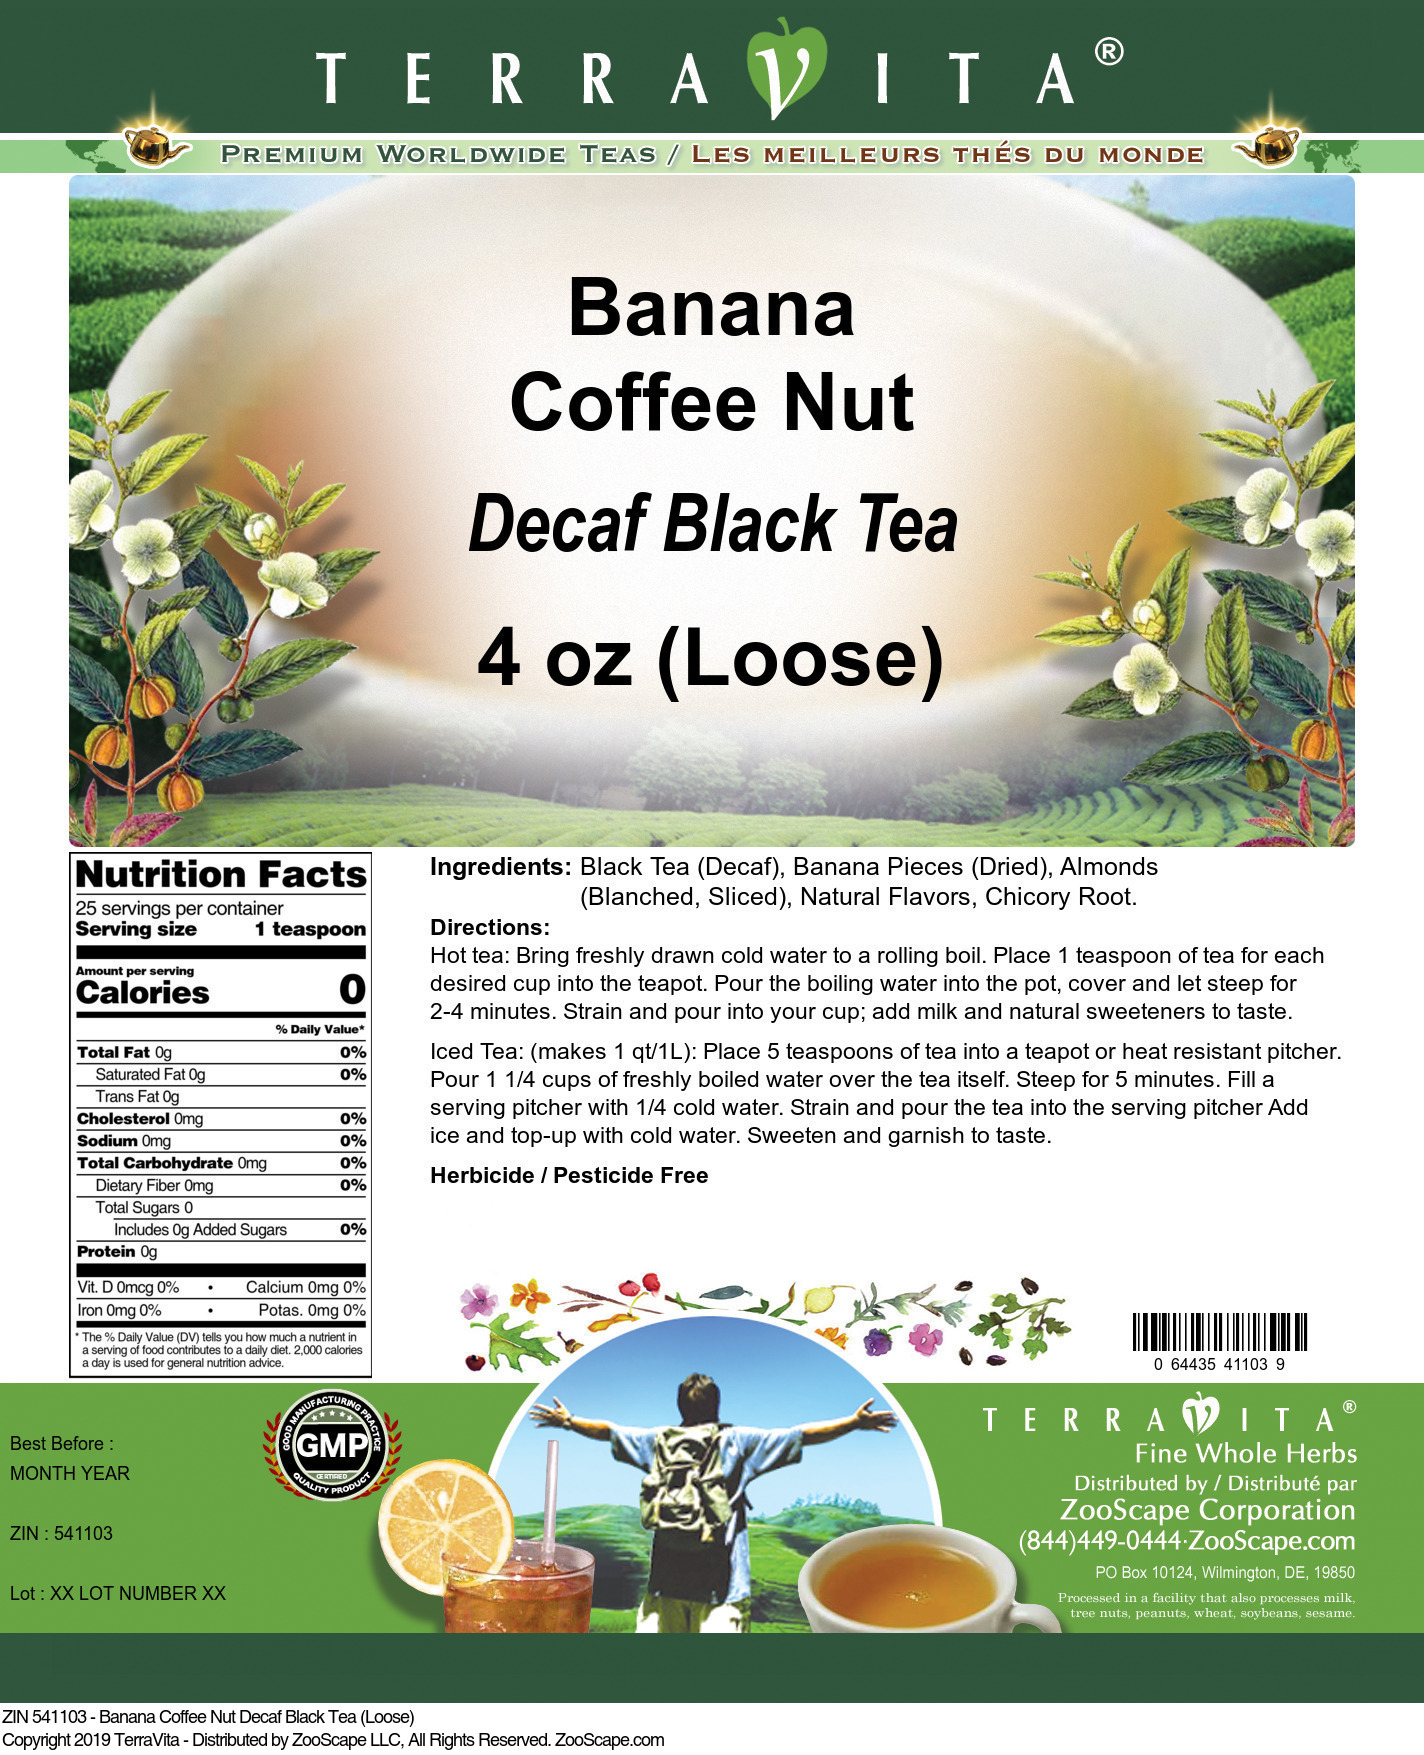 Banana Coffee Nut Decaf Black Tea (Loose) - Label